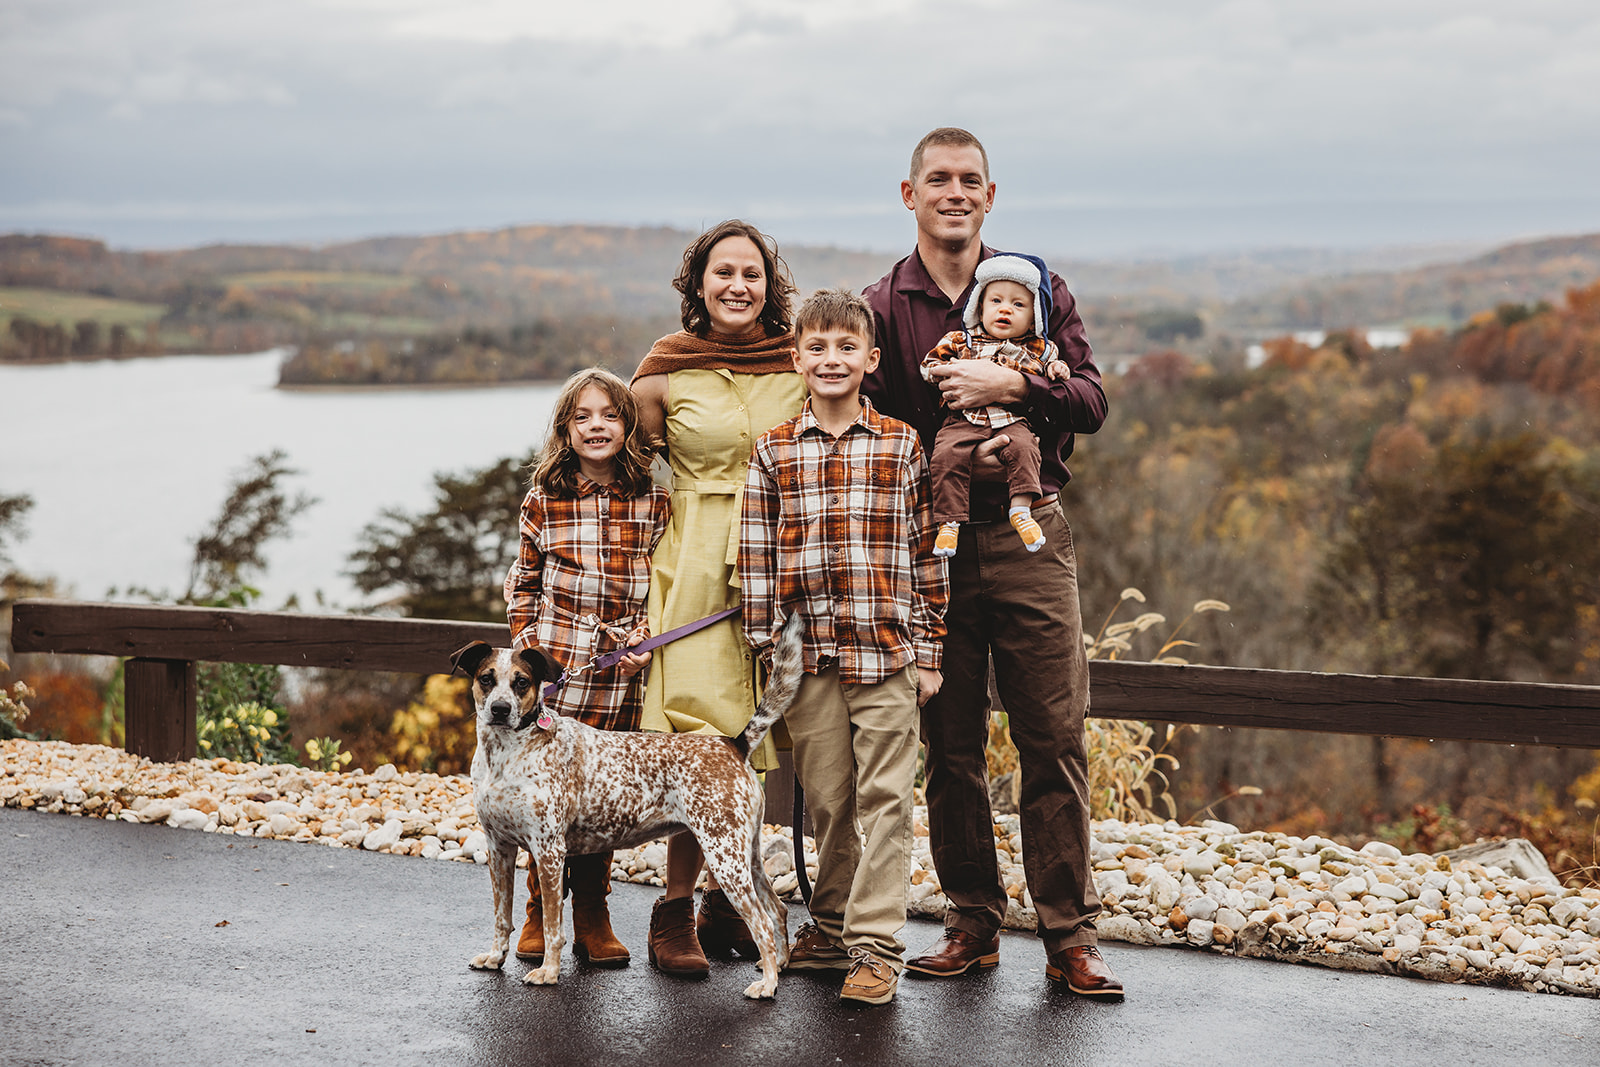 rainy outdoor fall family portrait session photoshoot Blue Marsh Lake Reading Wyomissing Pennsylvania